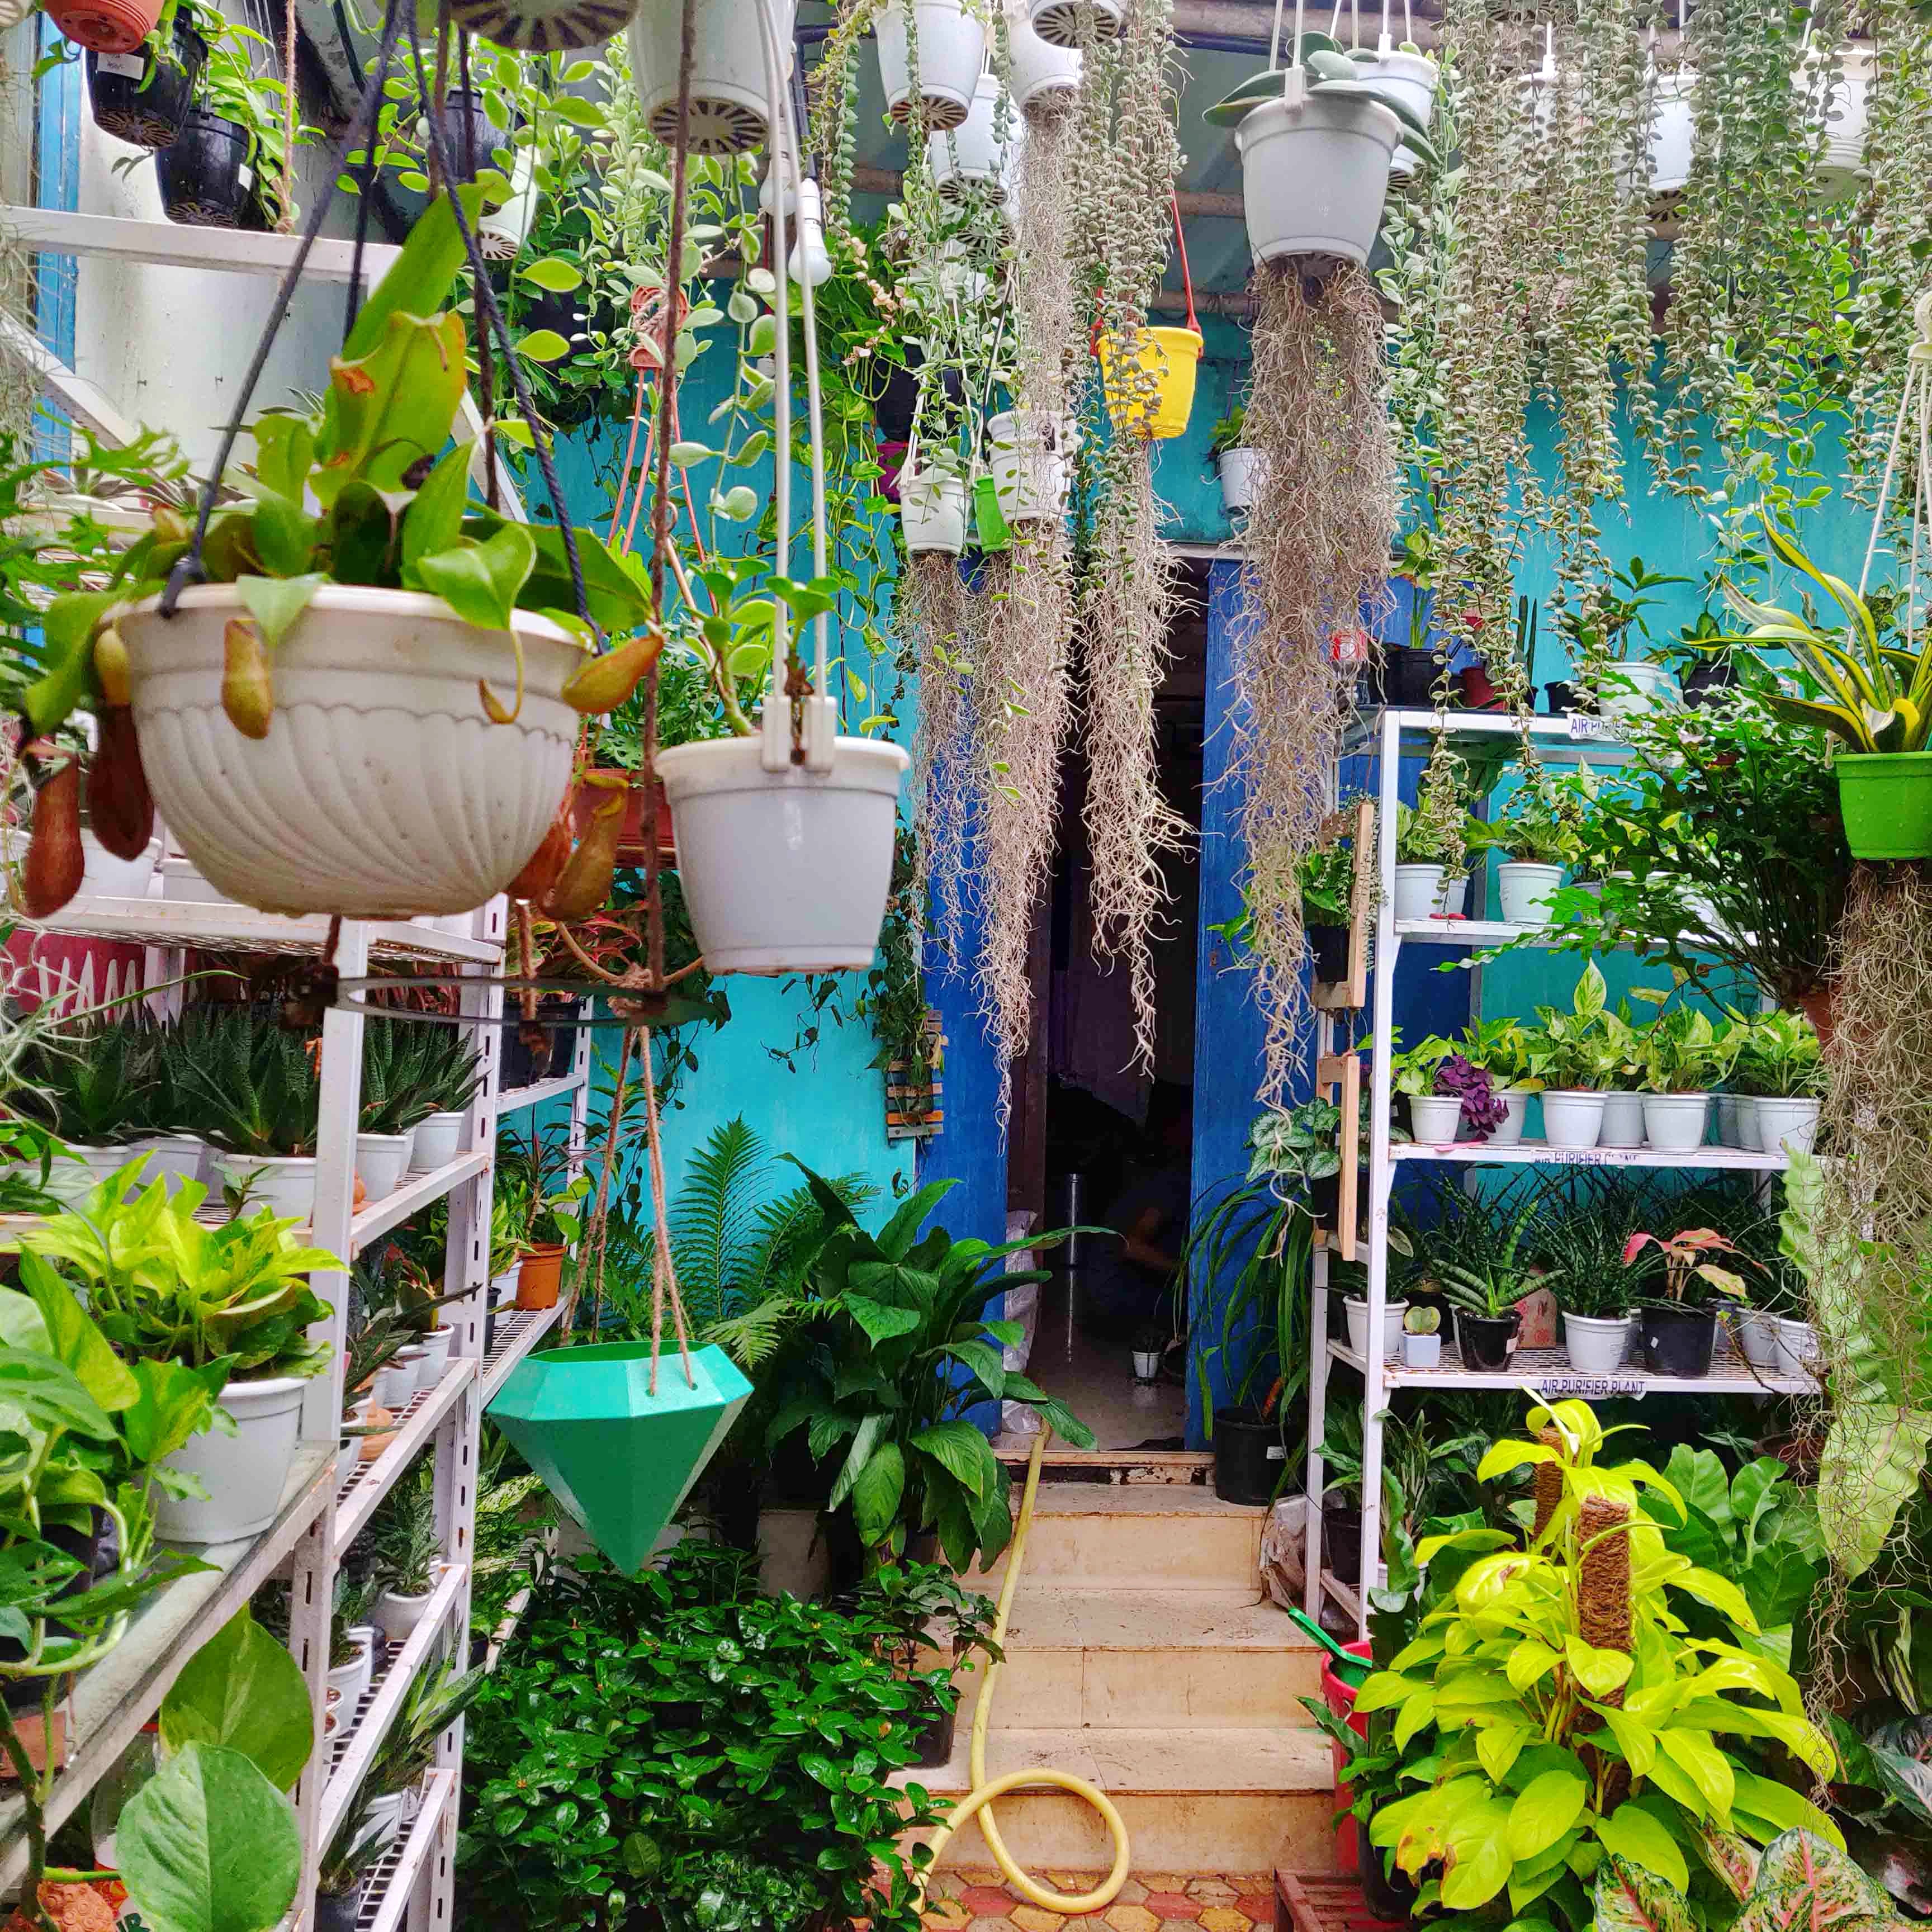 Botany,Flower,Plant,Garden,Flowerpot,Houseplant,Architecture,House,Yard,Backyard